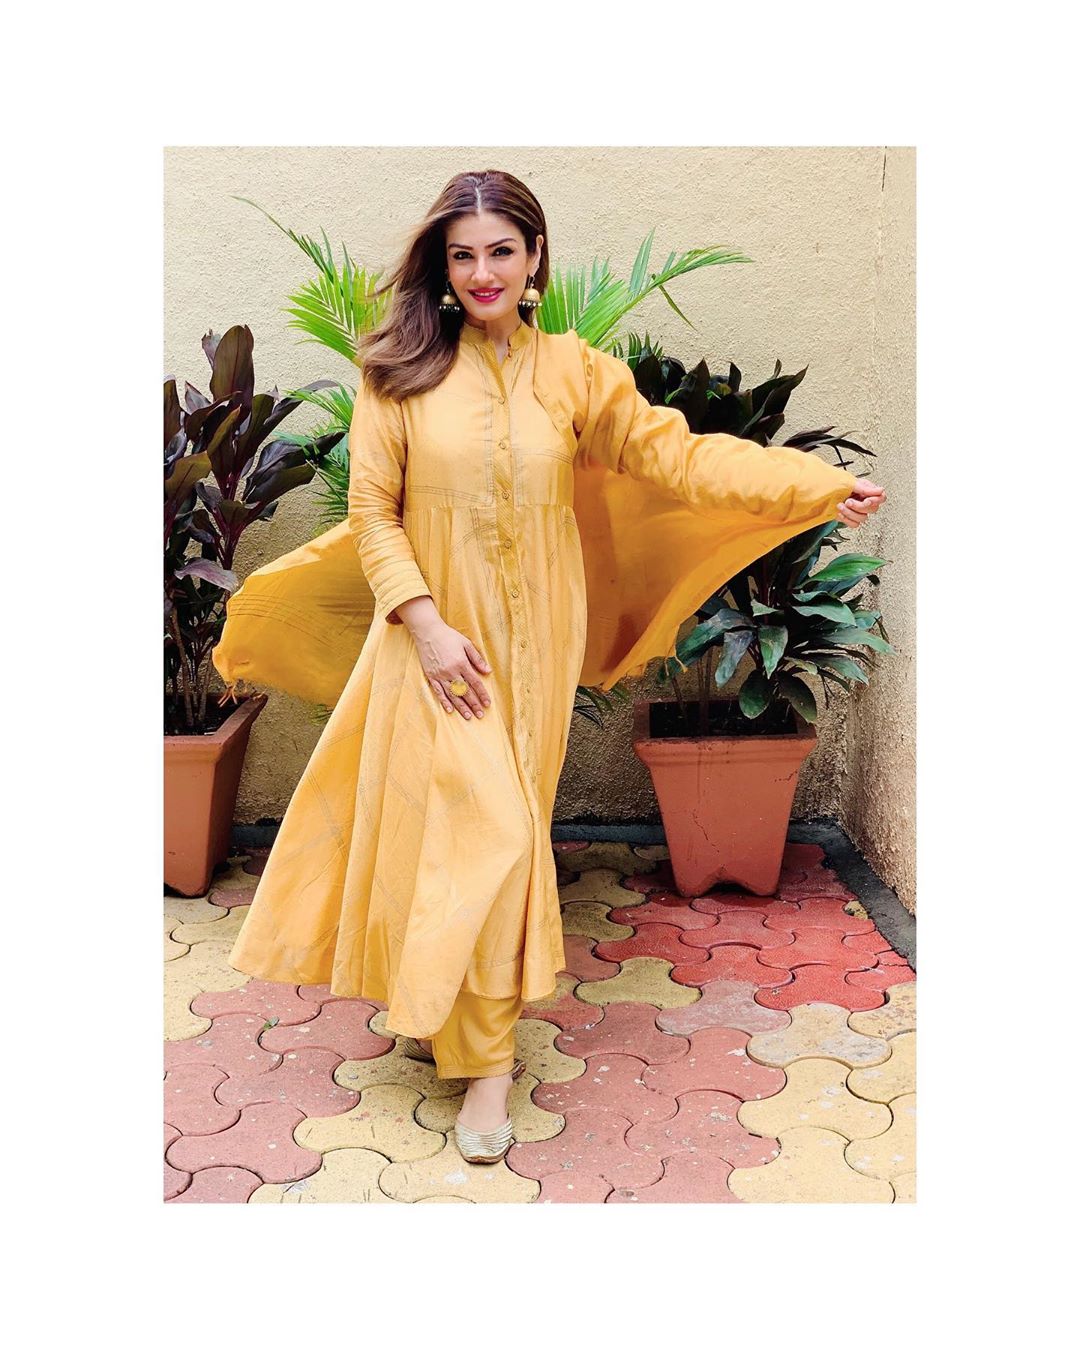 Raveena Tandon gives fashion goals with her latest lehenga avatar ...